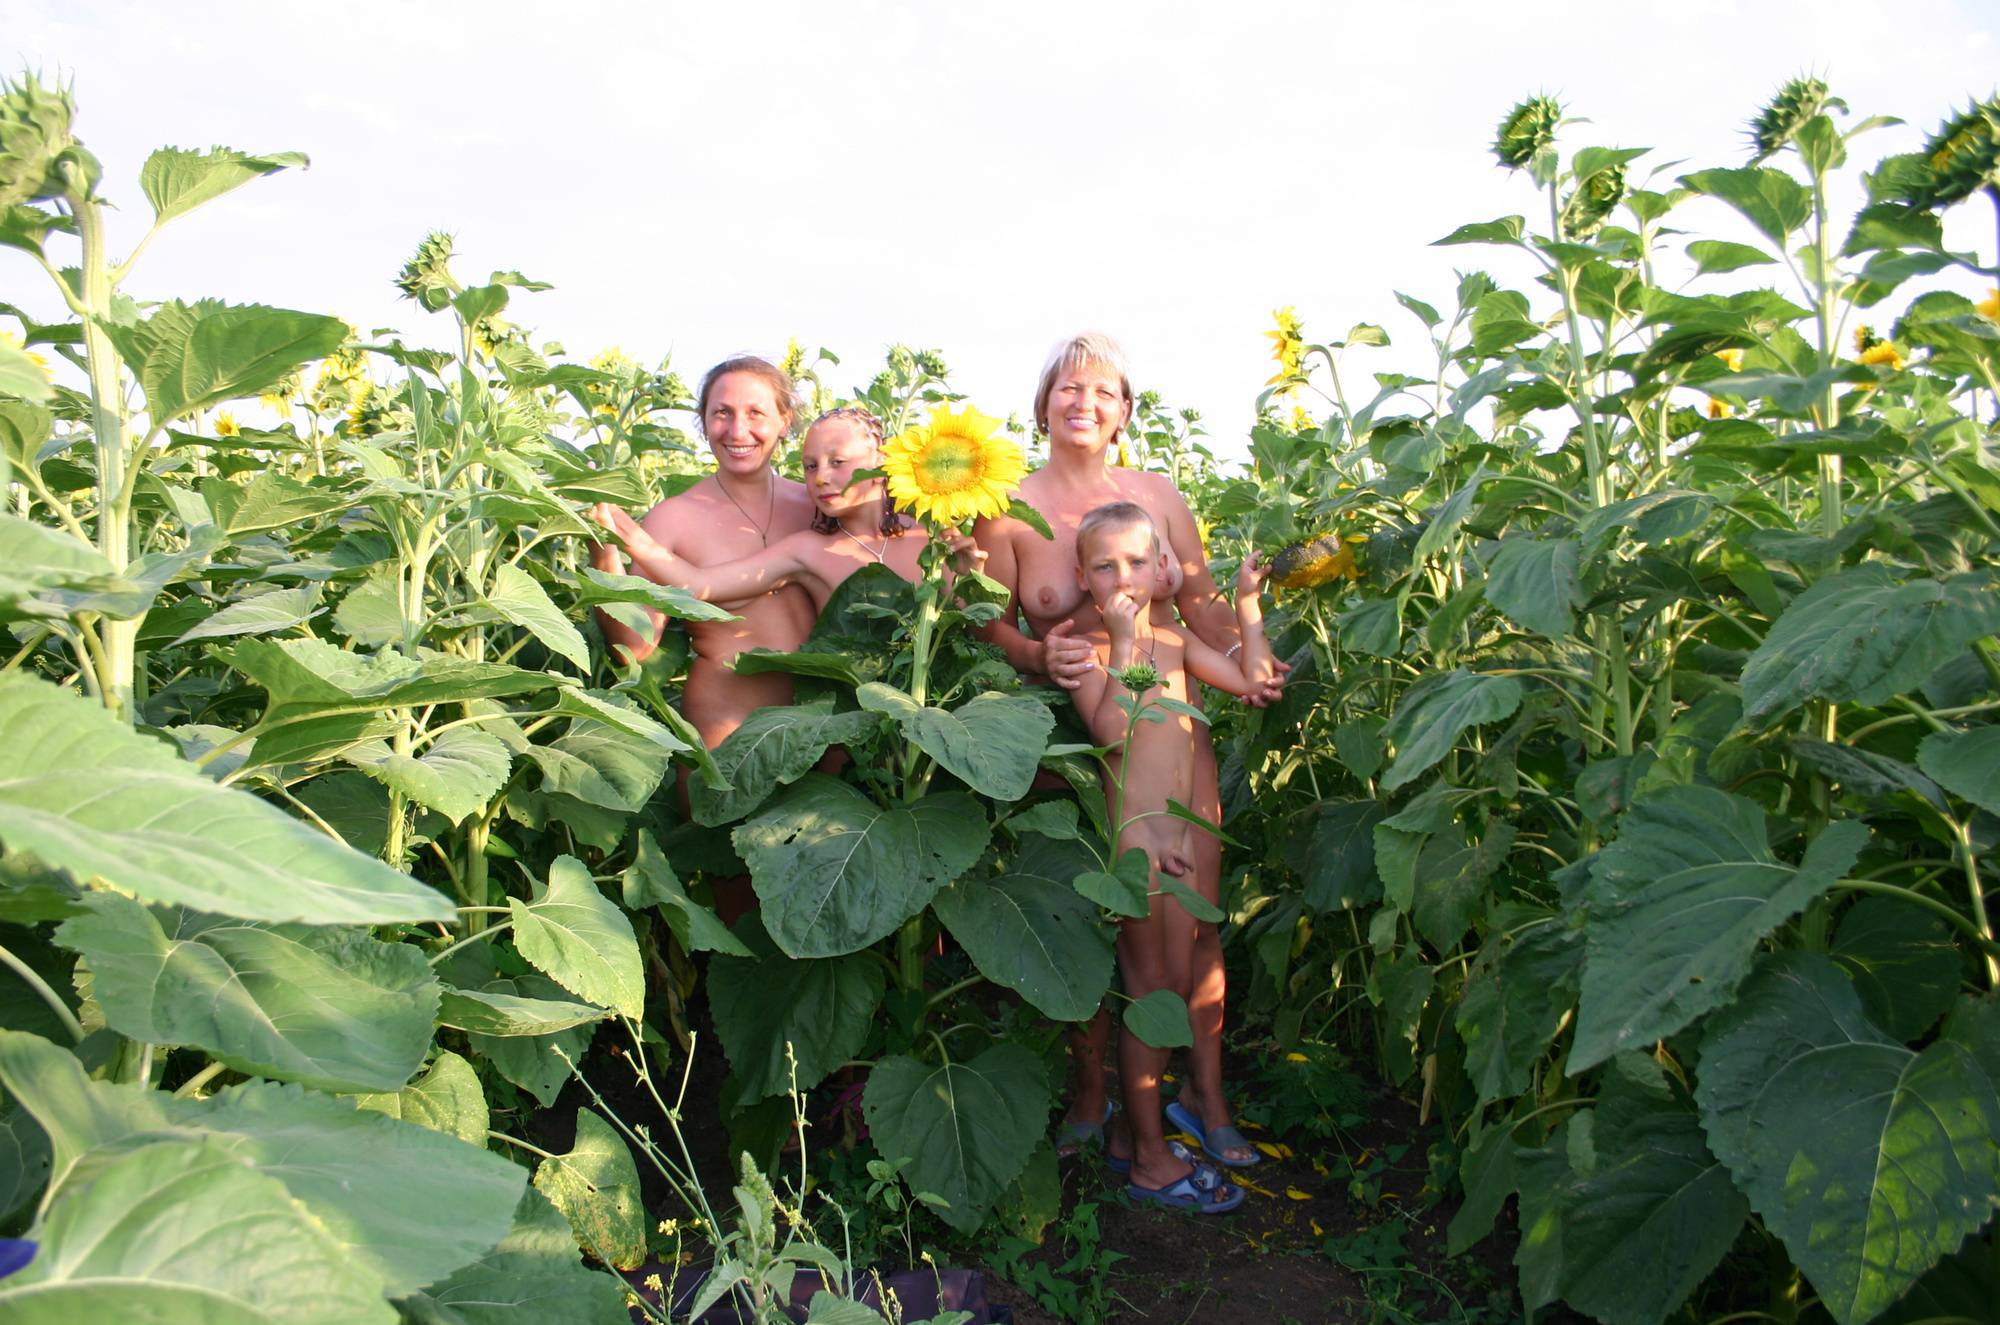 Nudist Pics Outdoor Sunflower Fields - 1